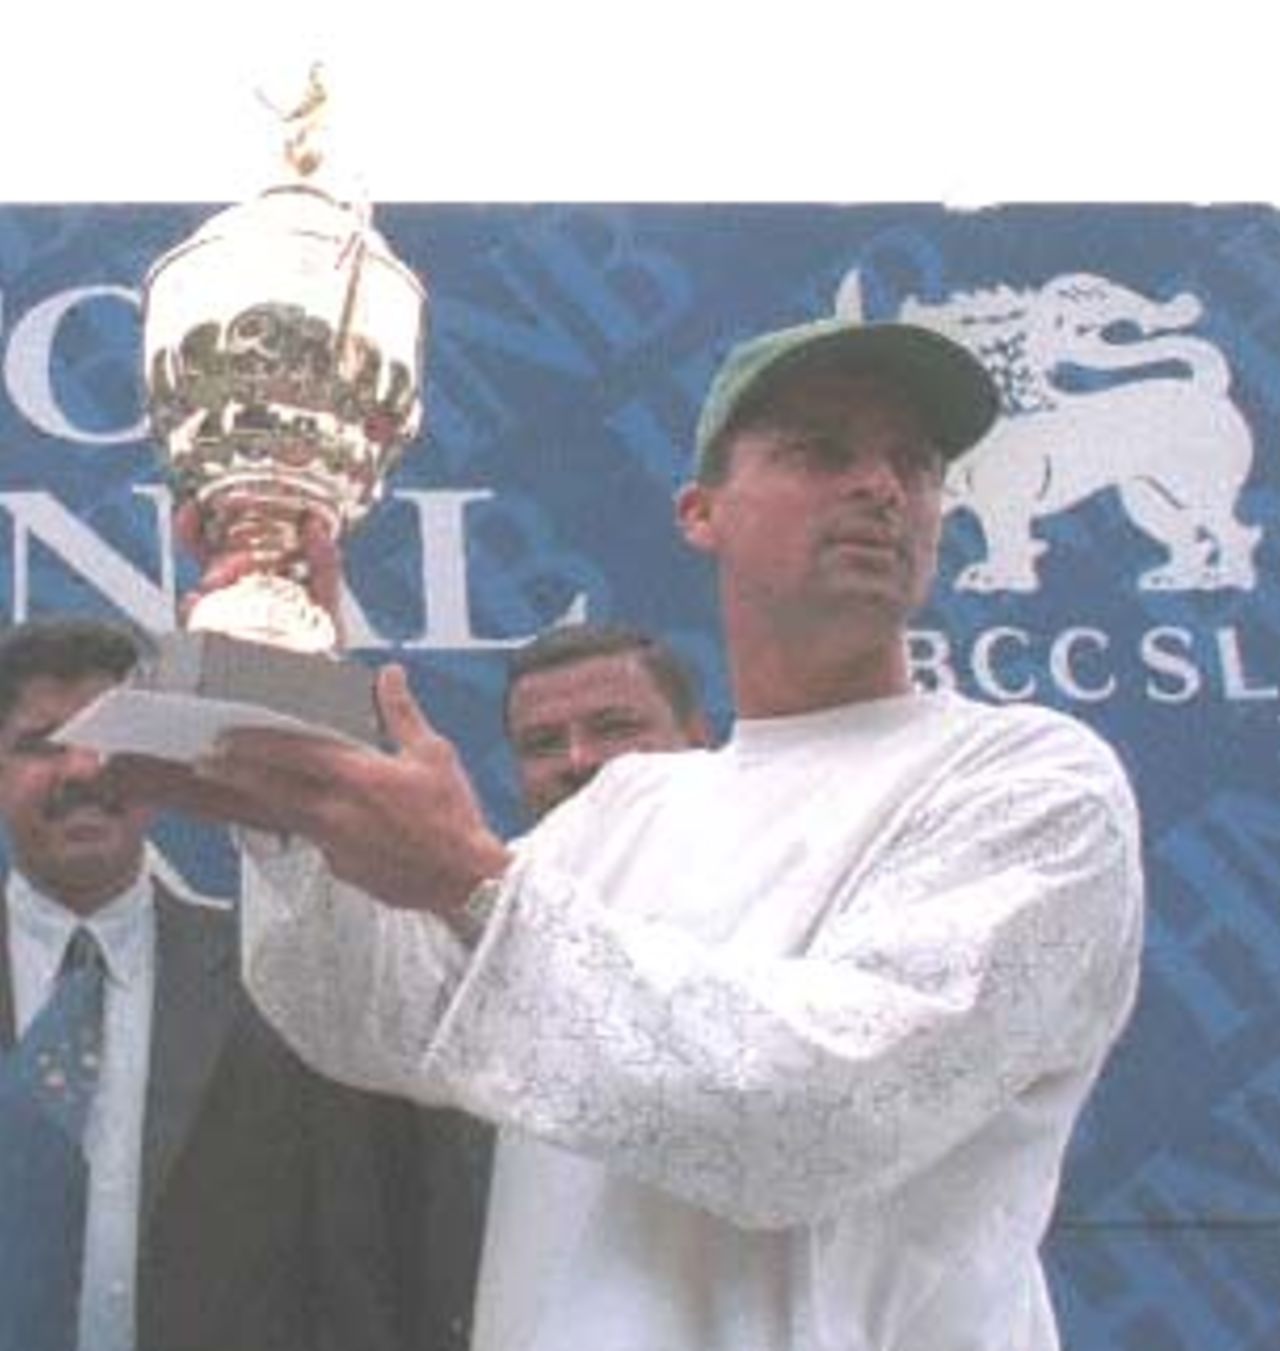 Pakistan skipper Moin Khan raises the trophy after the third and final Test against Sri Lanka was abandoned due to rain. Pakistan won the three test series 2-0. Pakistan in Sri Lanka 1999/00, 3rd Test, Sri Lanka v Pakistan Asgiriya Stadium, Kandy, 28 June - 02 July 2000 (Day  5)